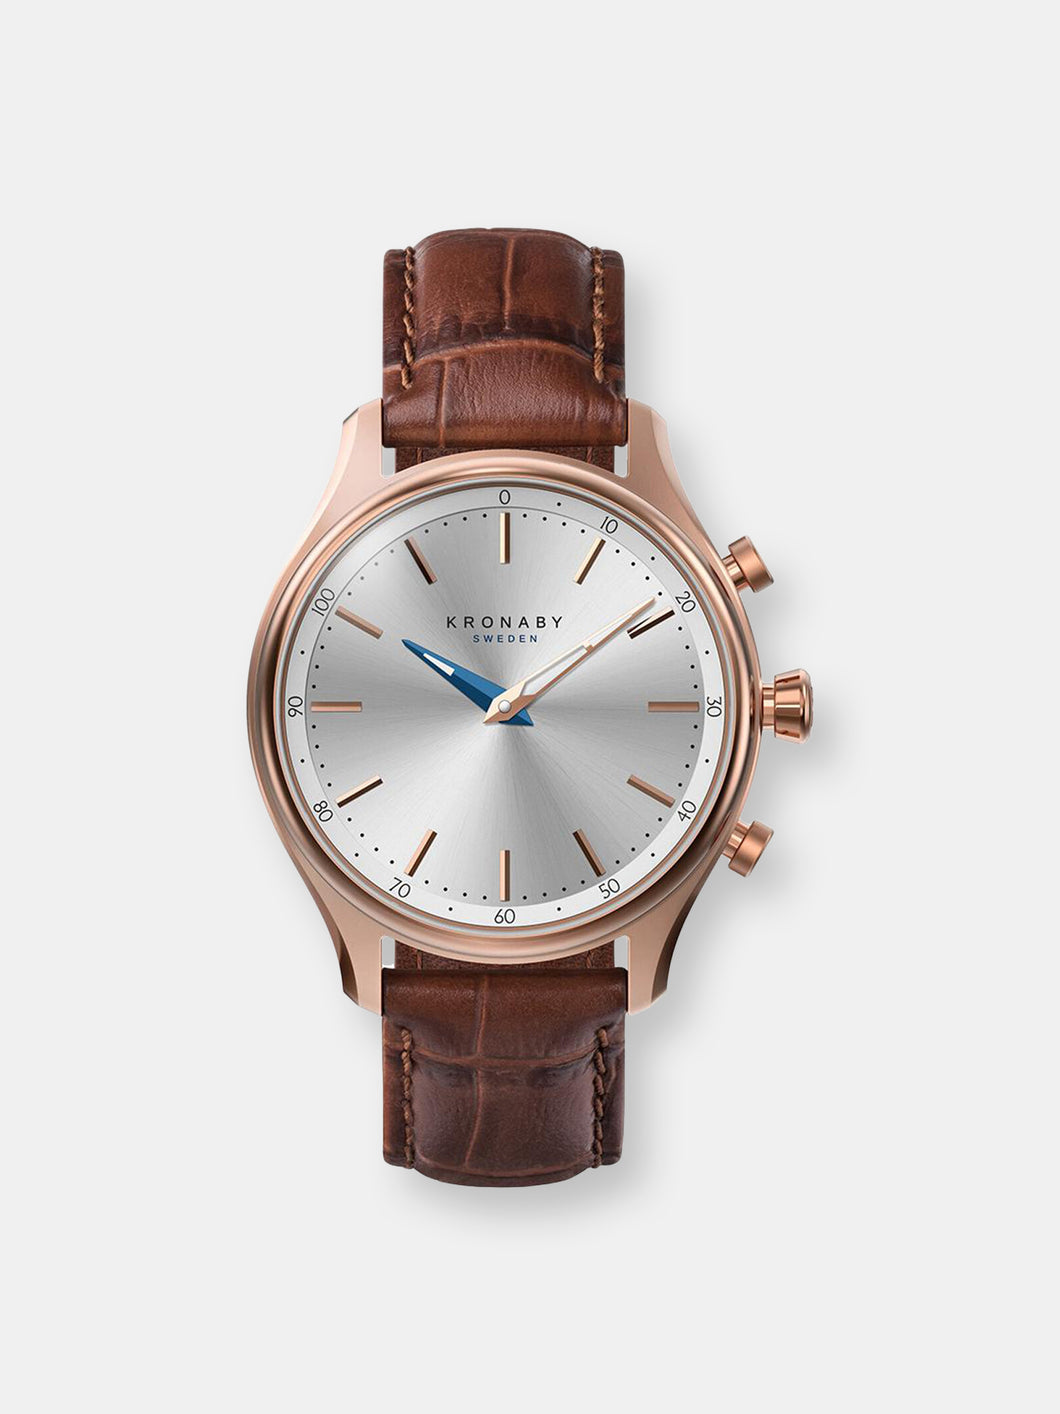 Kronaby Sekel S2748-1 Brown Leather Automatic Self Wind Smart Watch